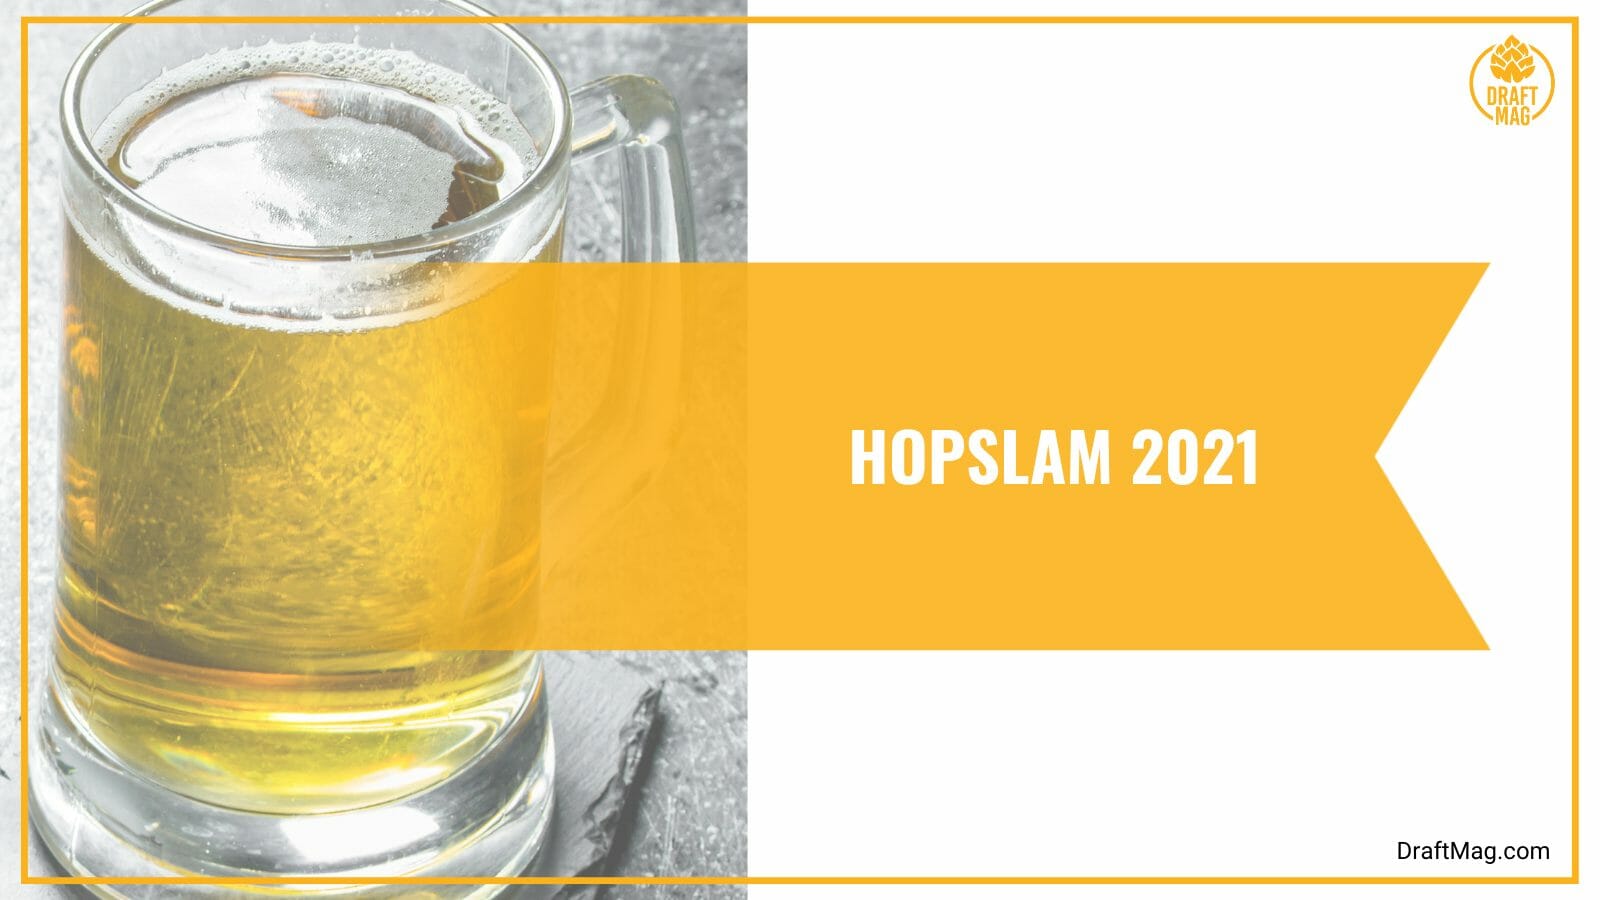 Hopslam 2021 Qualities